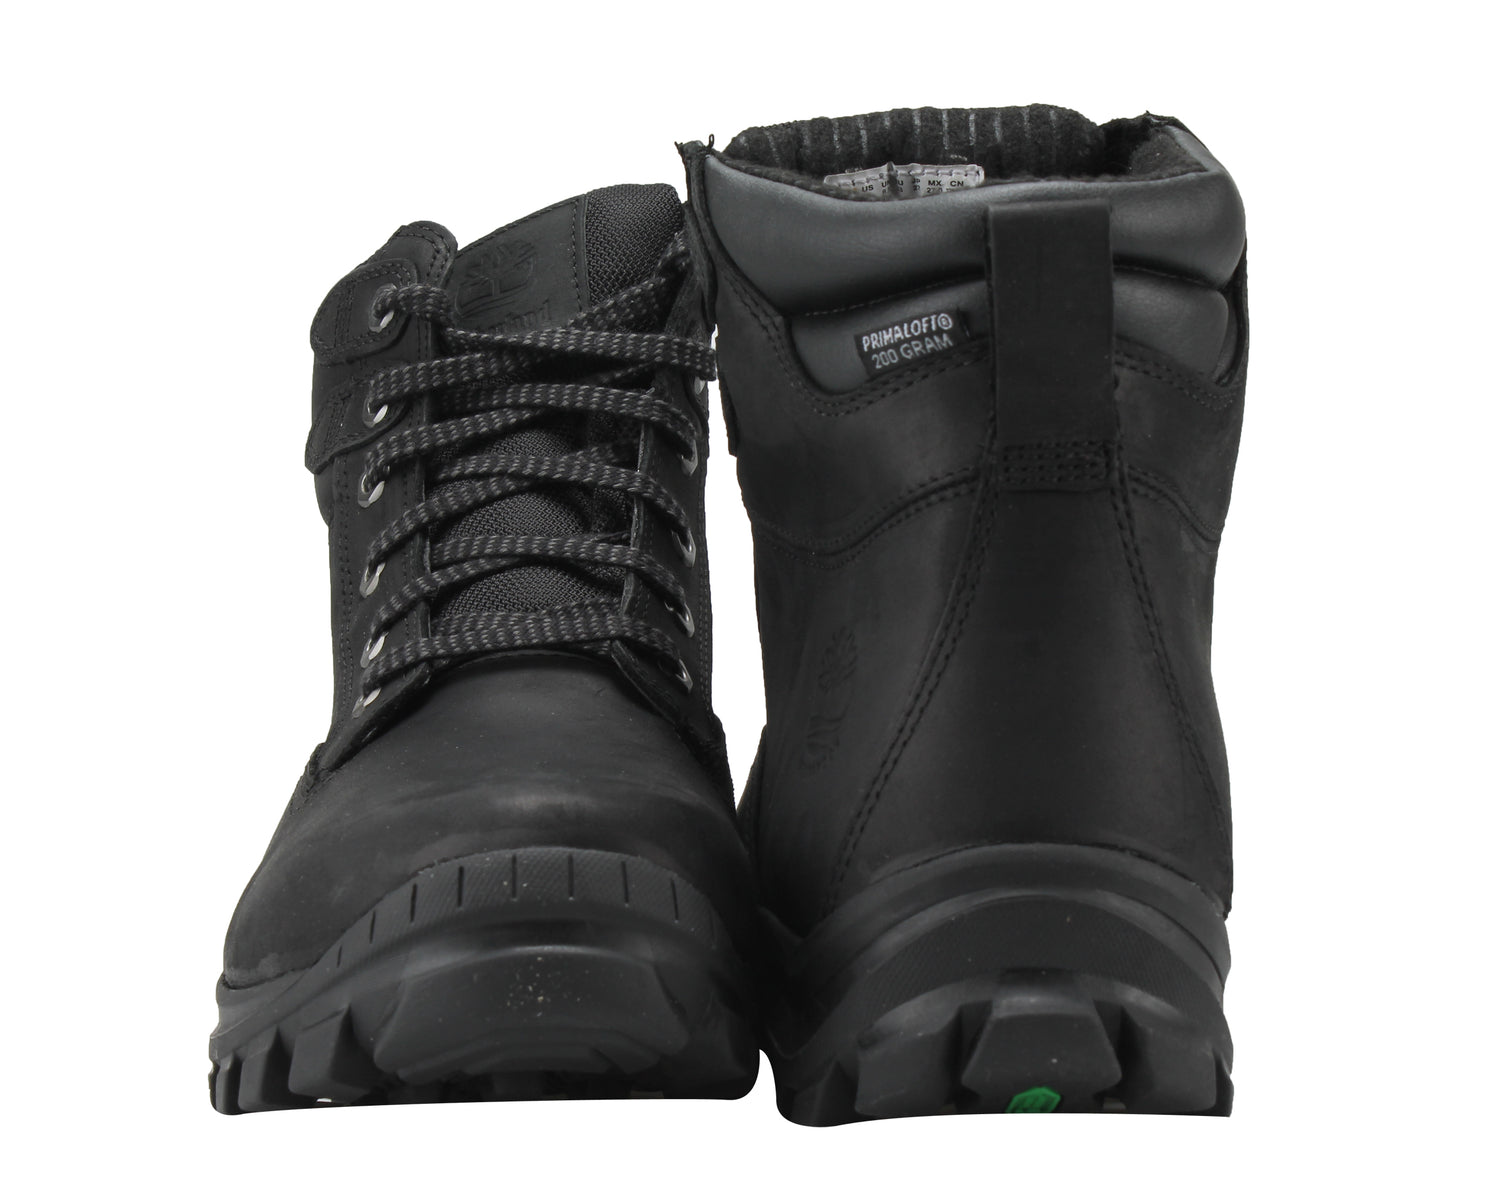 Timberland Chillberg Mid Waterproof Men's Boots